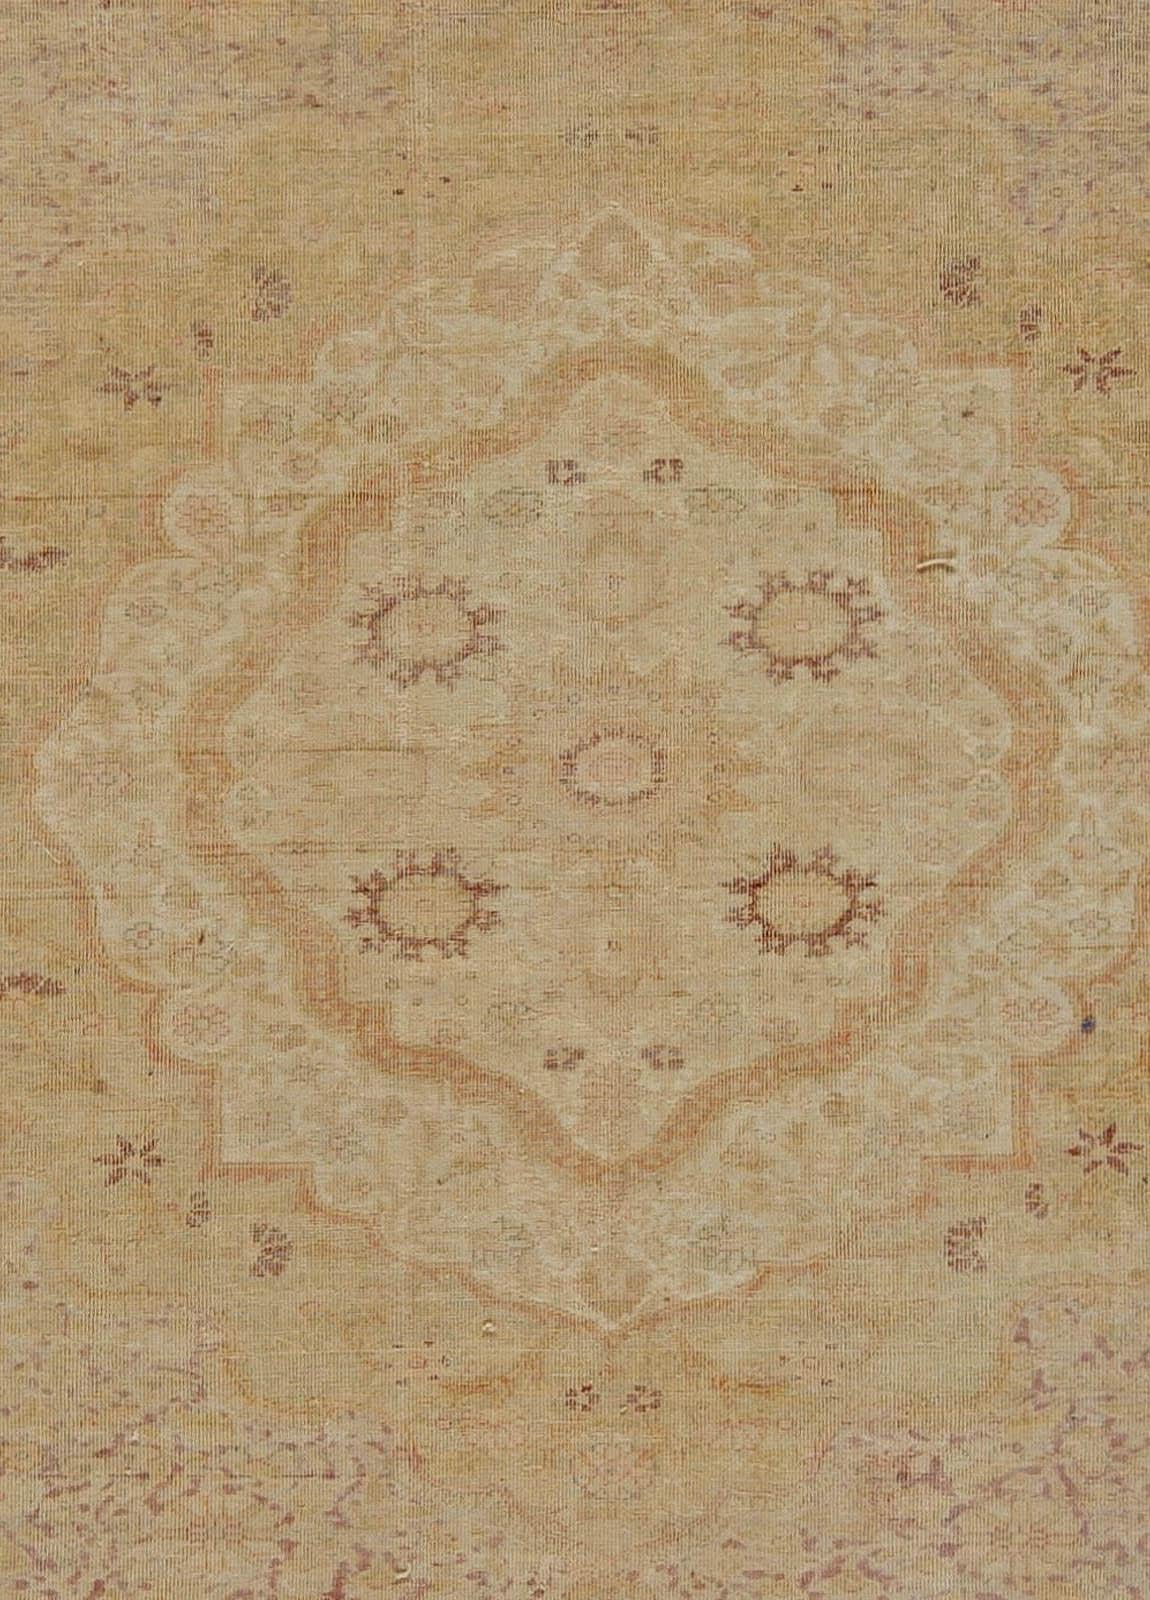 One-of-a-kind Vintage silk Turkish botanic beige carpet
Size: 8'6